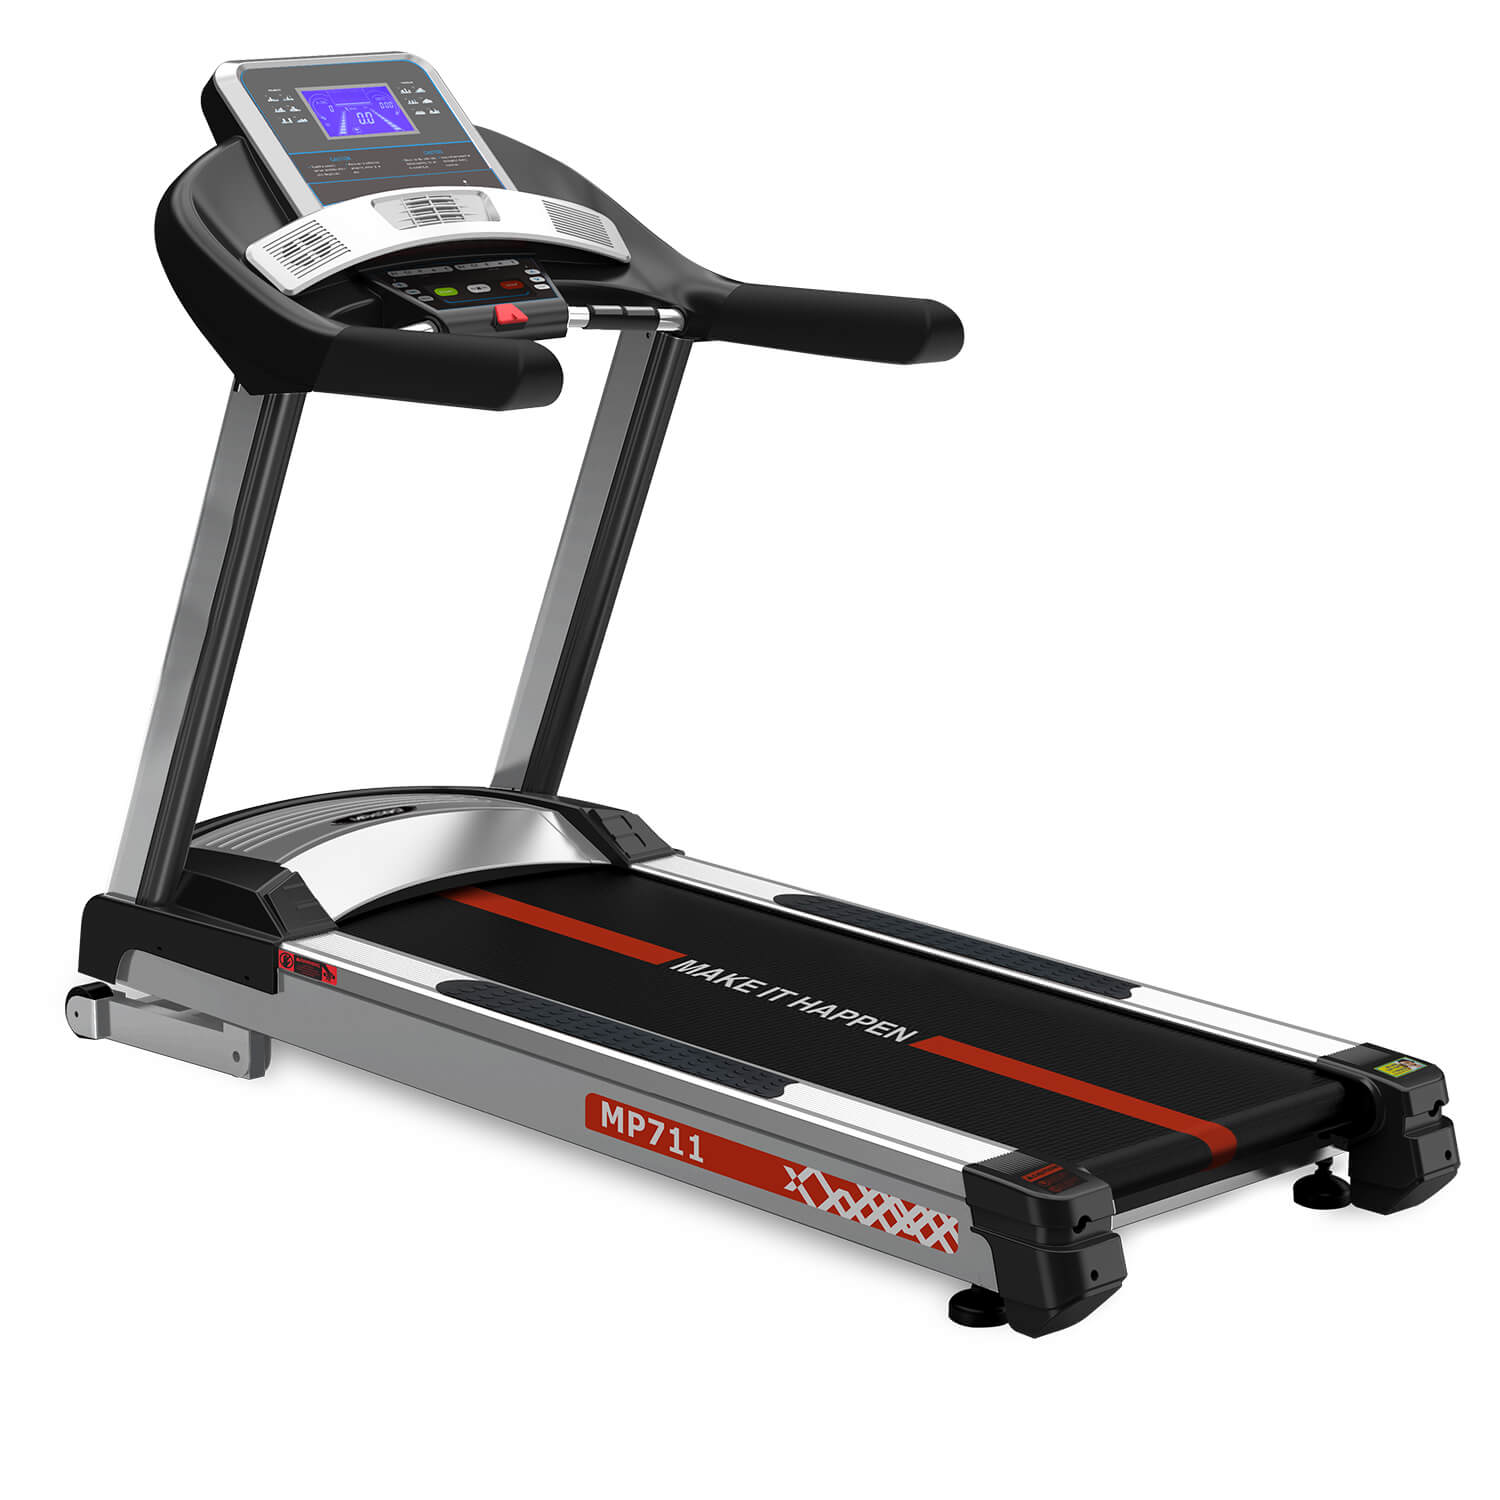 MP711 Treadmill